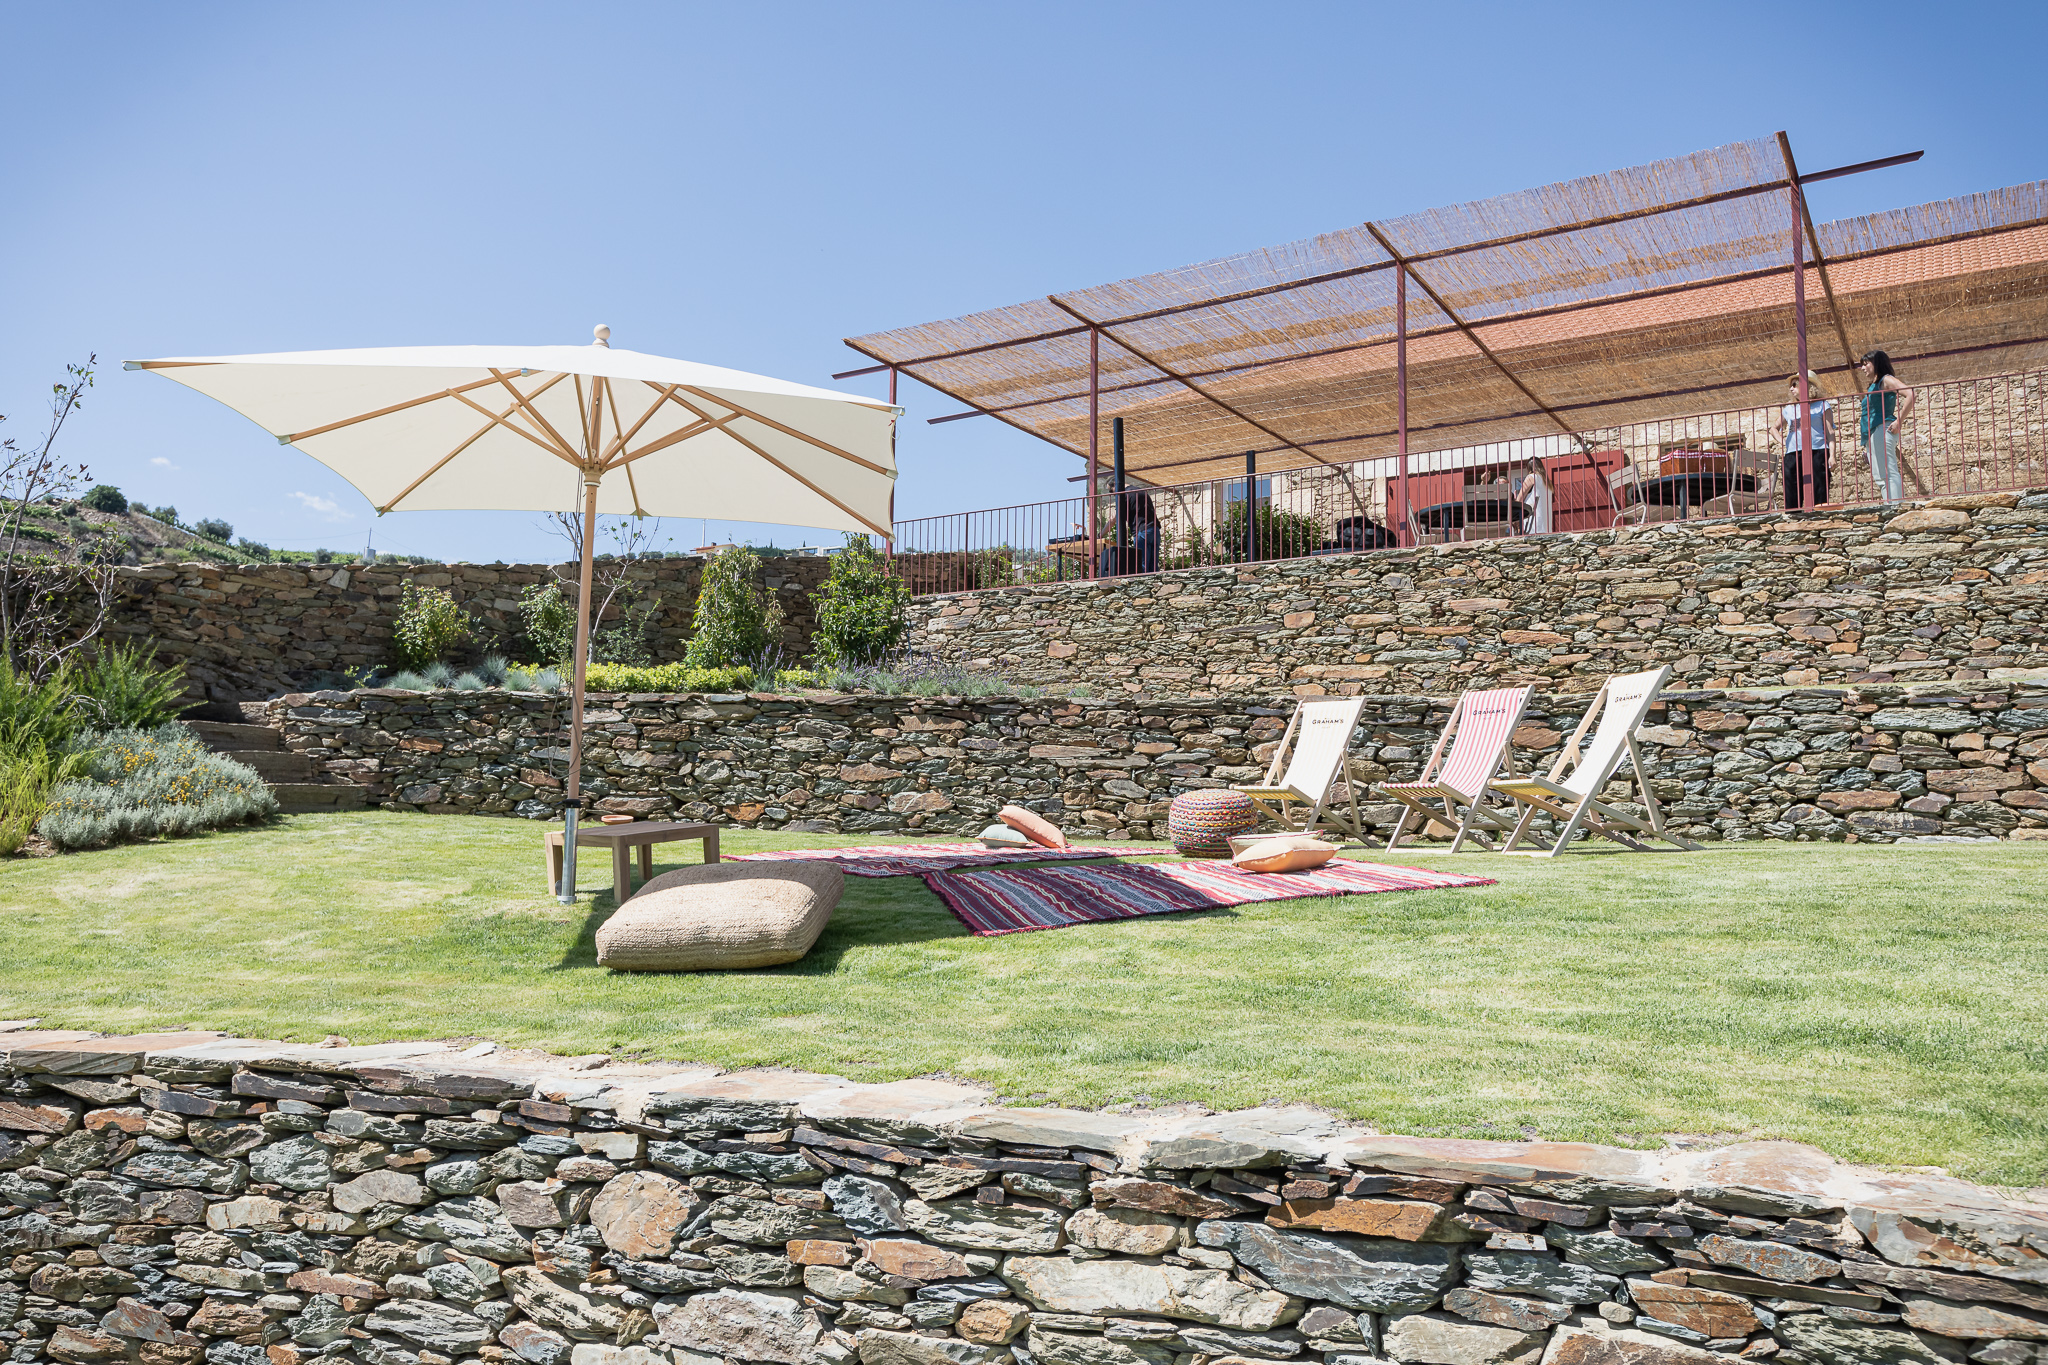 Quinta Do Bomfim: Hospitality and Heritage Blend in Award-Winning Wine Tourism